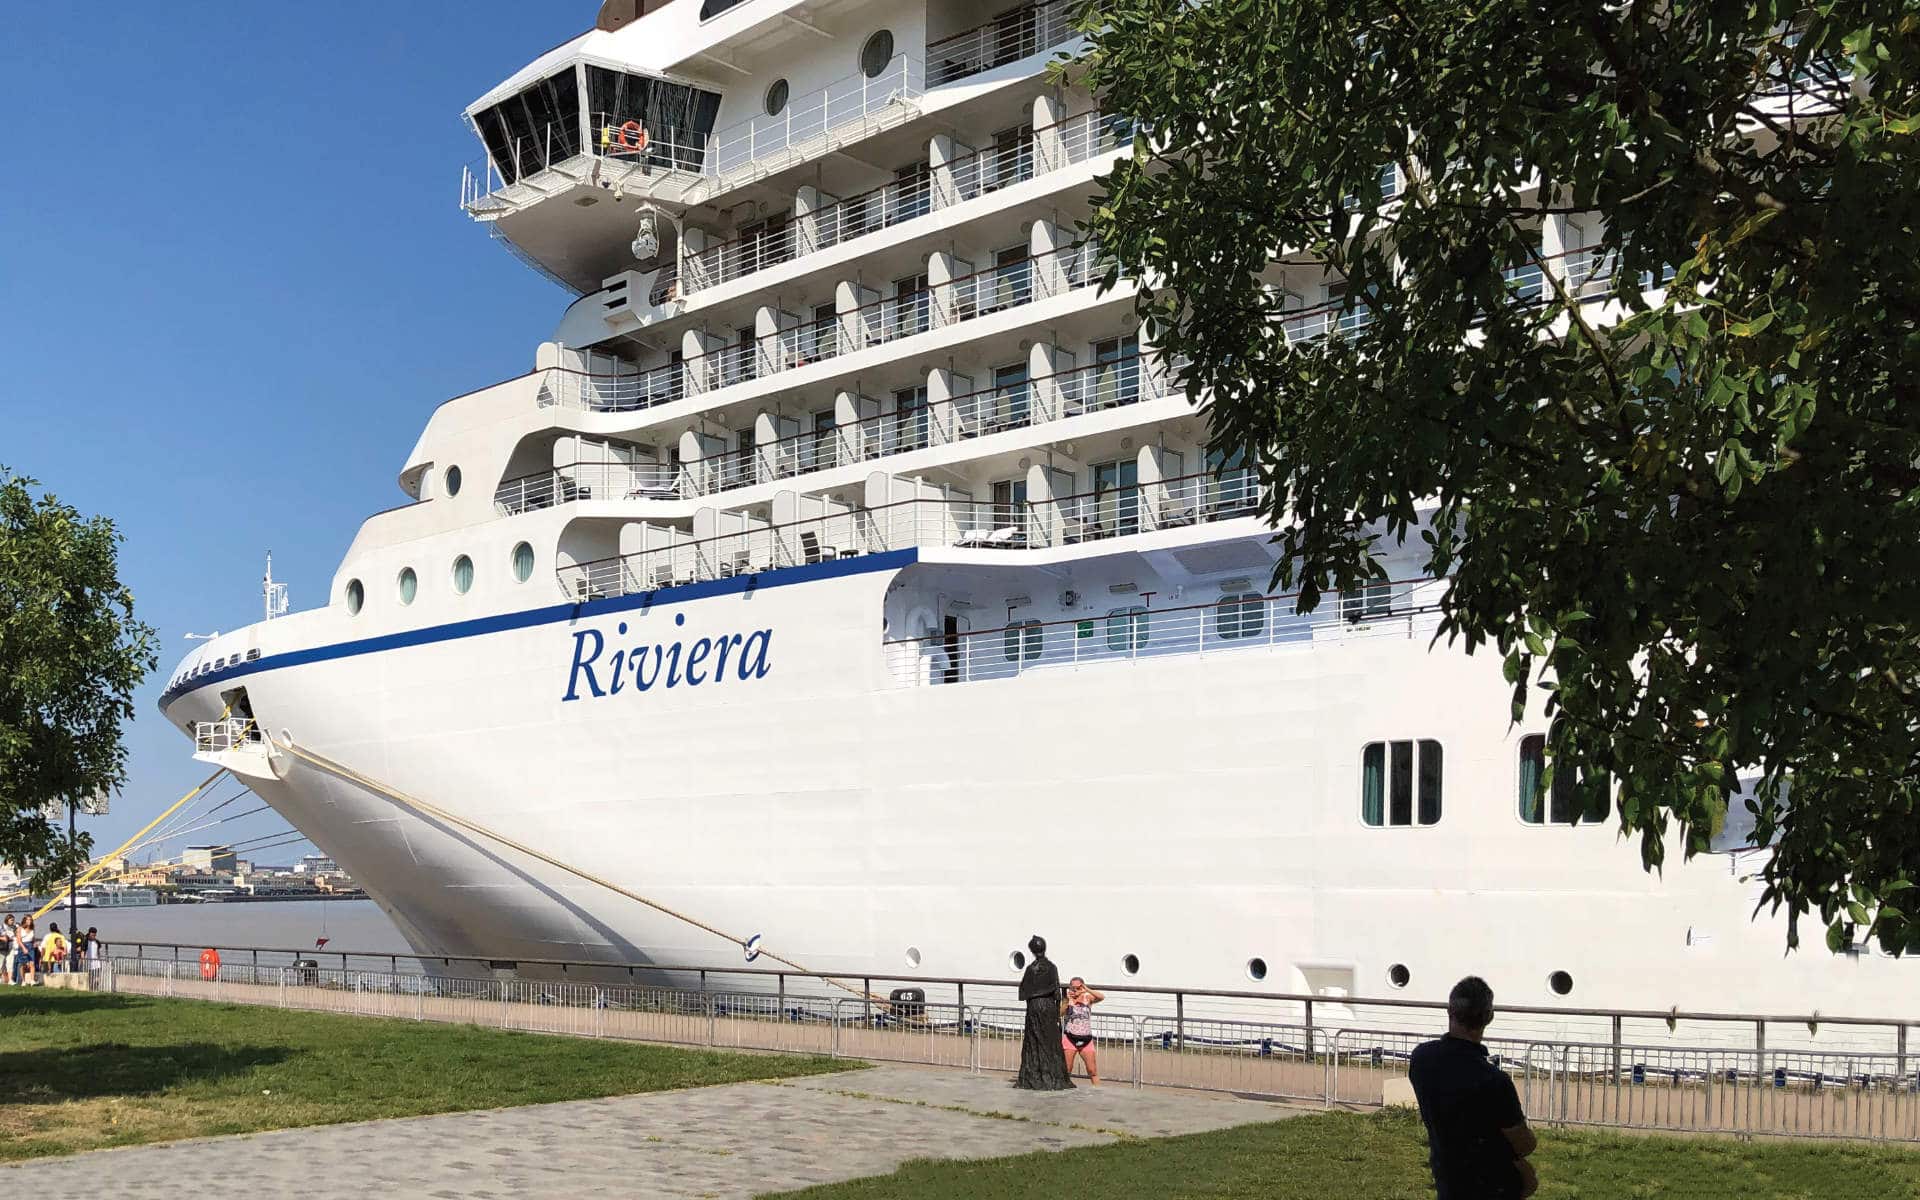 Oceania Riviera cruise ship.